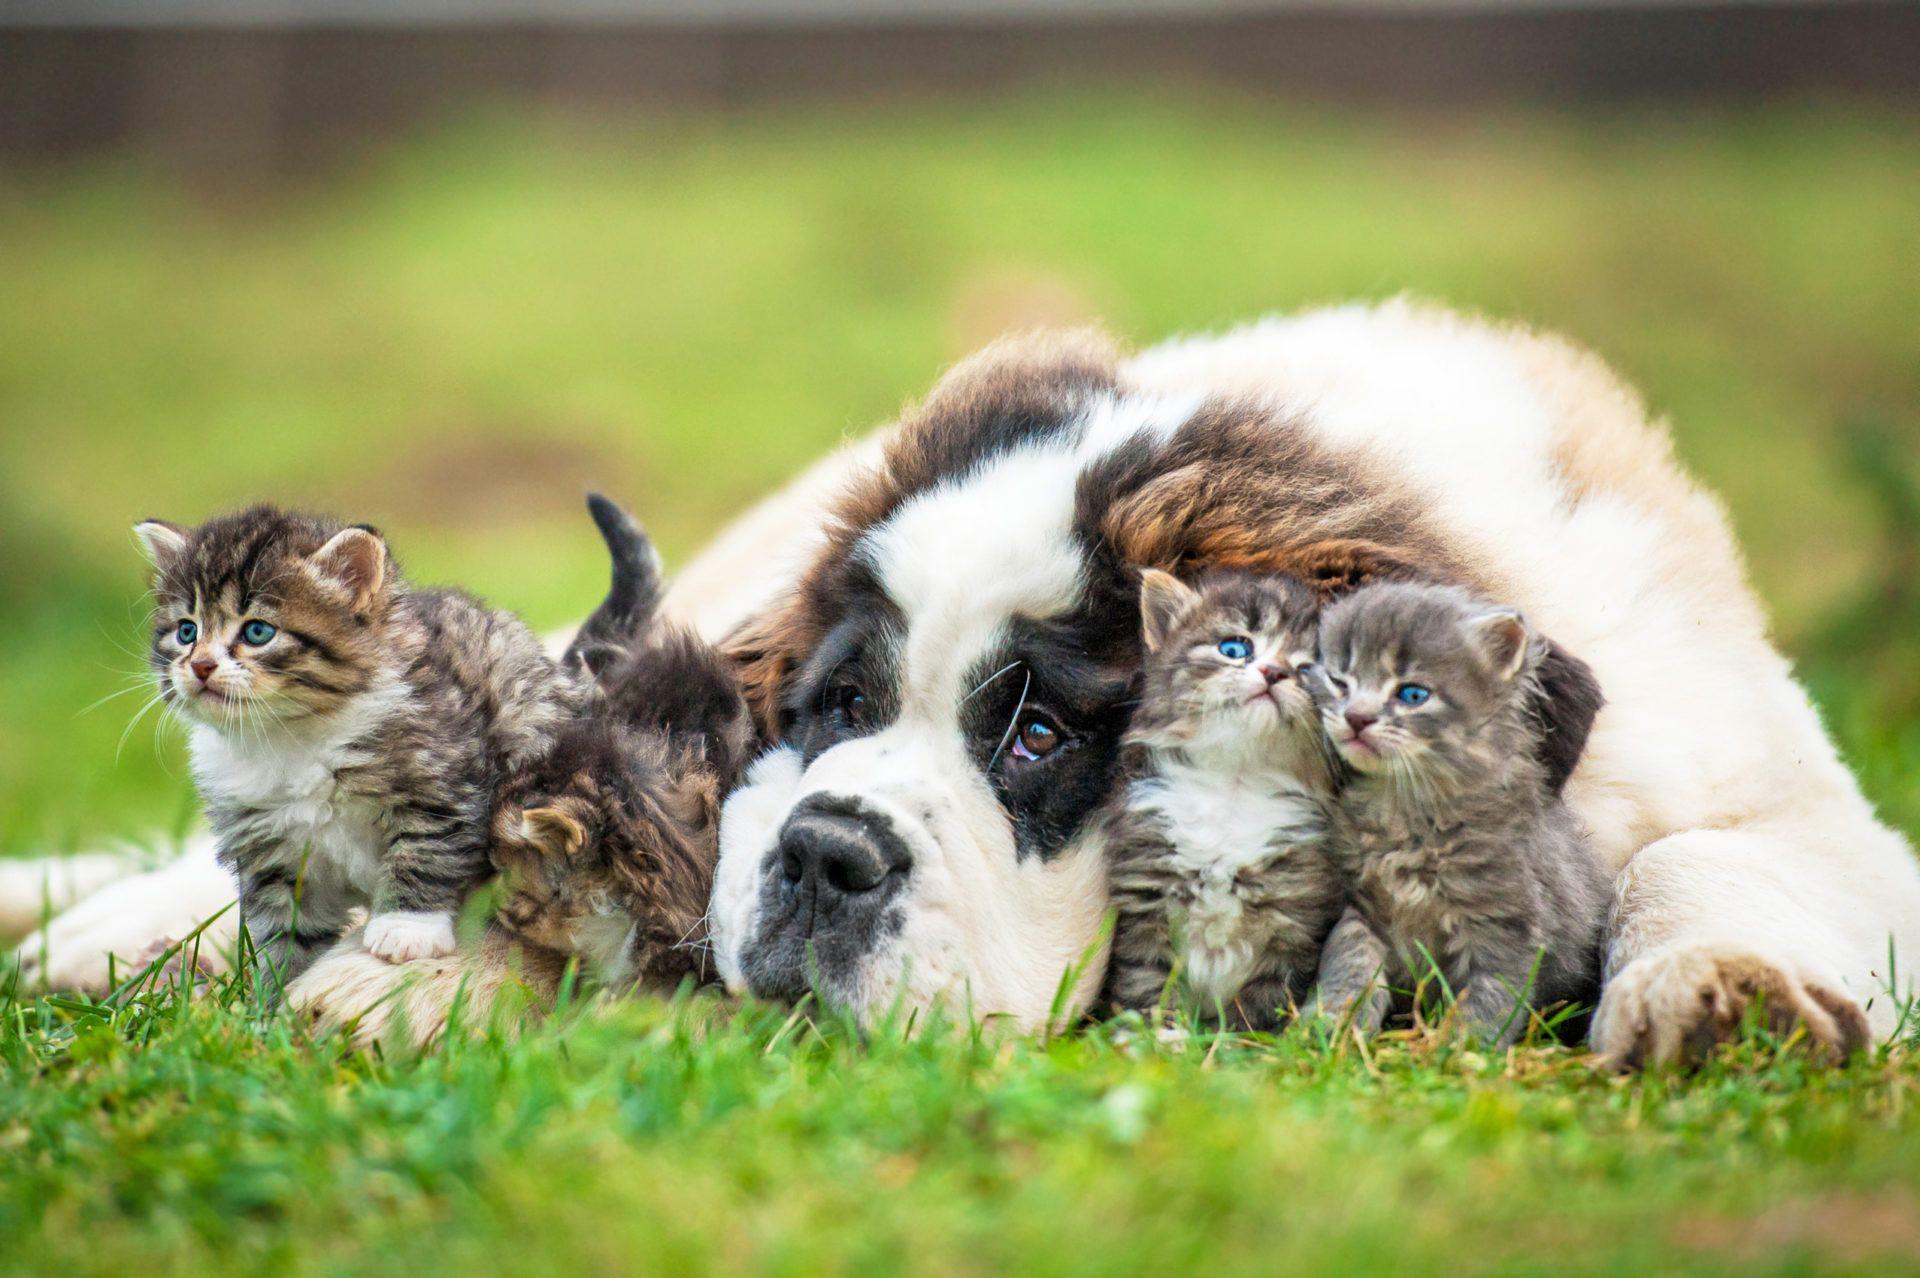 Видео про питомцев. Кошки и собаки. Счастливые собаки и кошки. Фото кошек и собак. Rjireb b CJ,FRB.